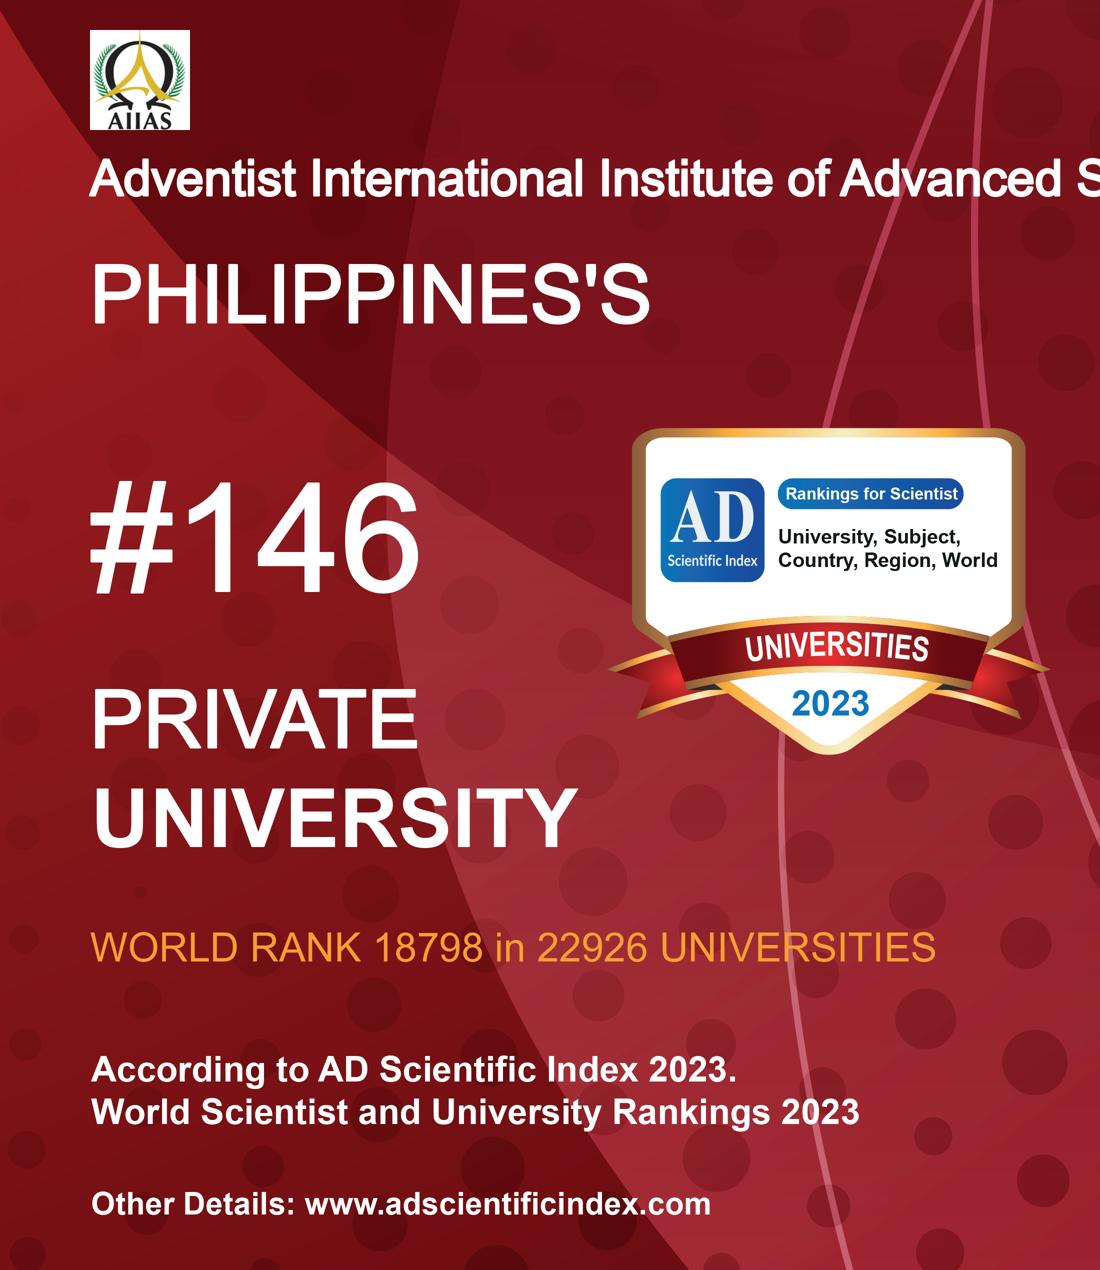 Adventist International Institute of Advanced Studies